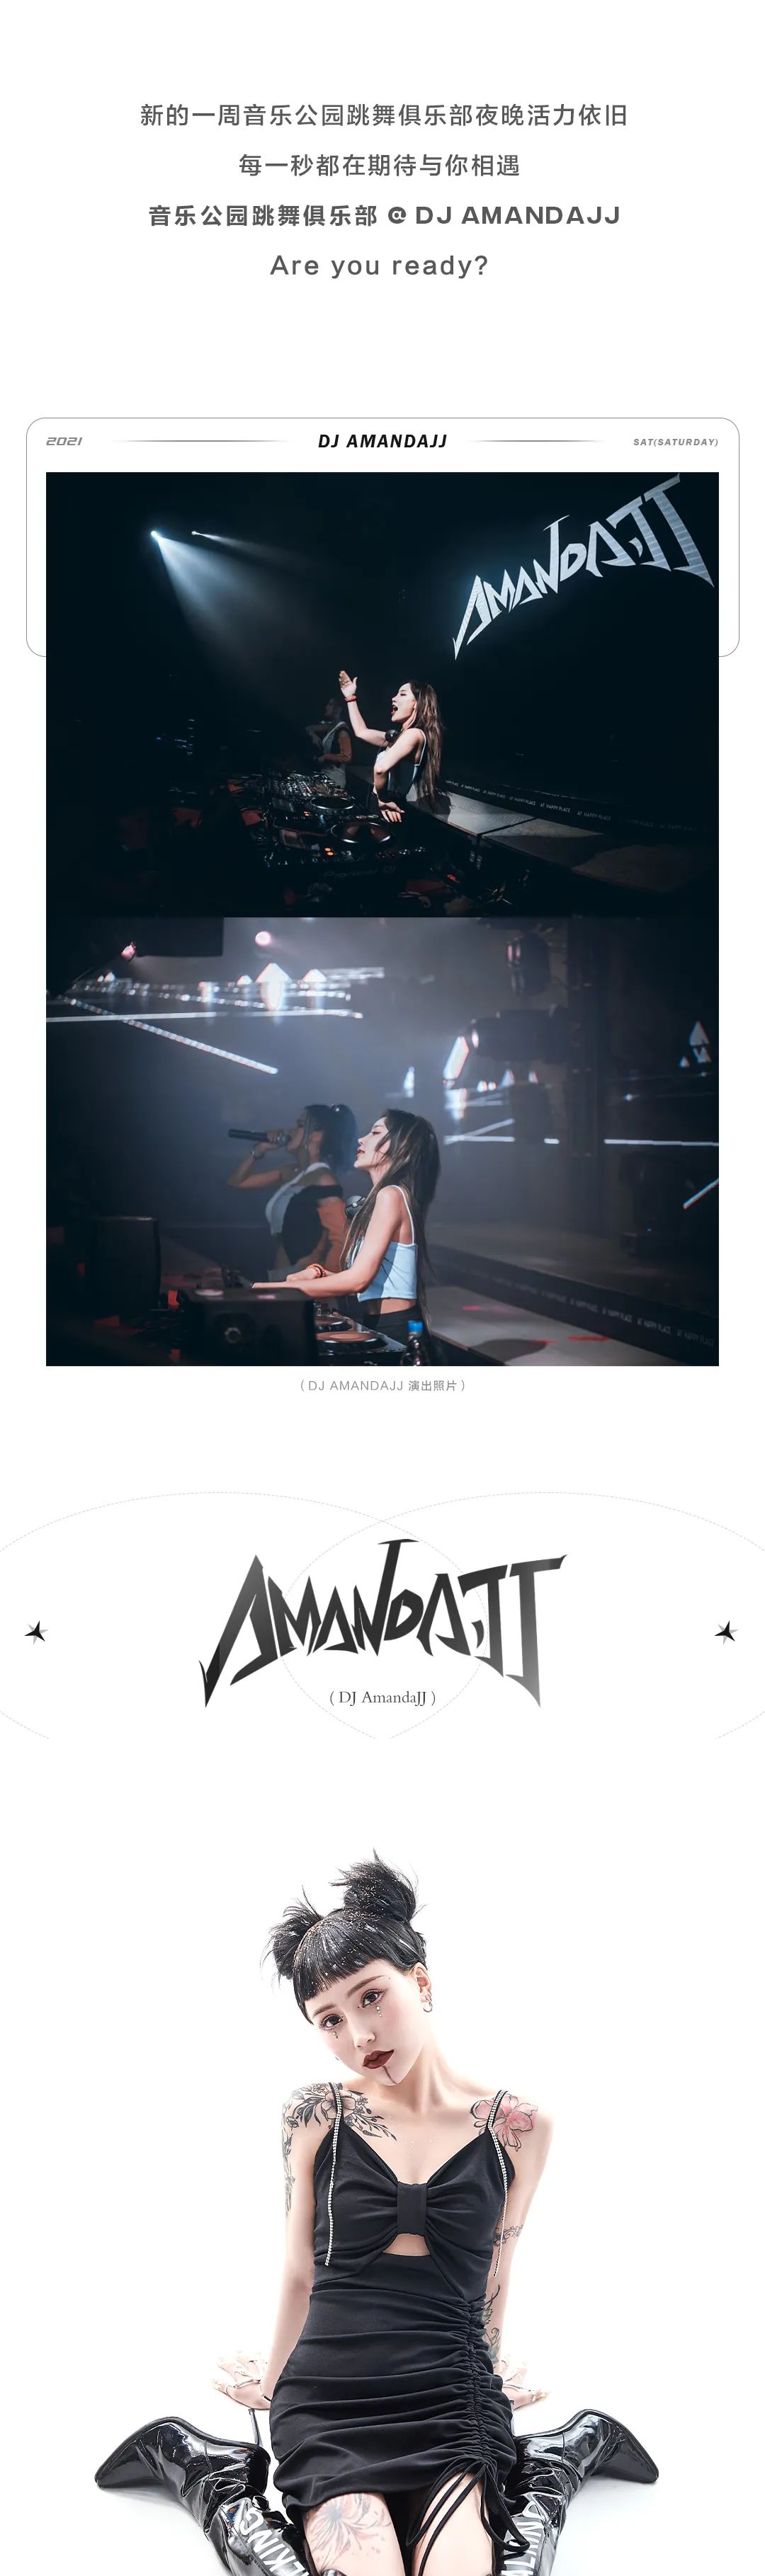 9.11 | DJ AMANDA.JJ 一只黑色的音乐精灵-塘厦音乐公园/MusicPark